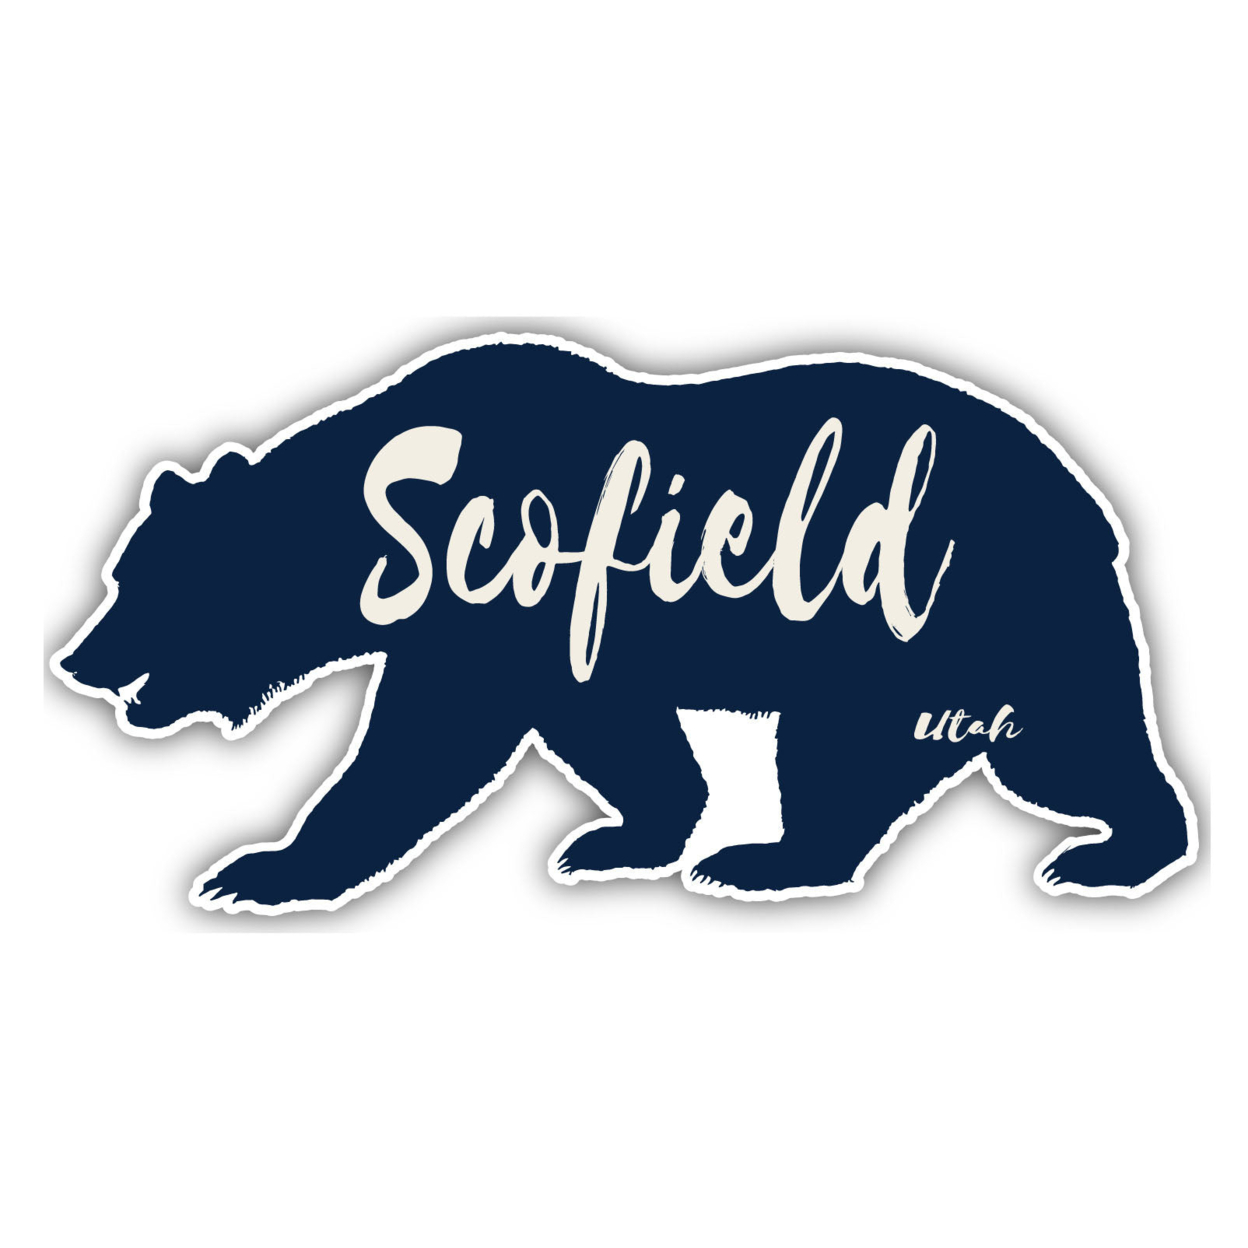 Scofield Utah Souvenir Decorative Stickers (Choose Theme And Size) - Single Unit, 2-Inch, Camp Life